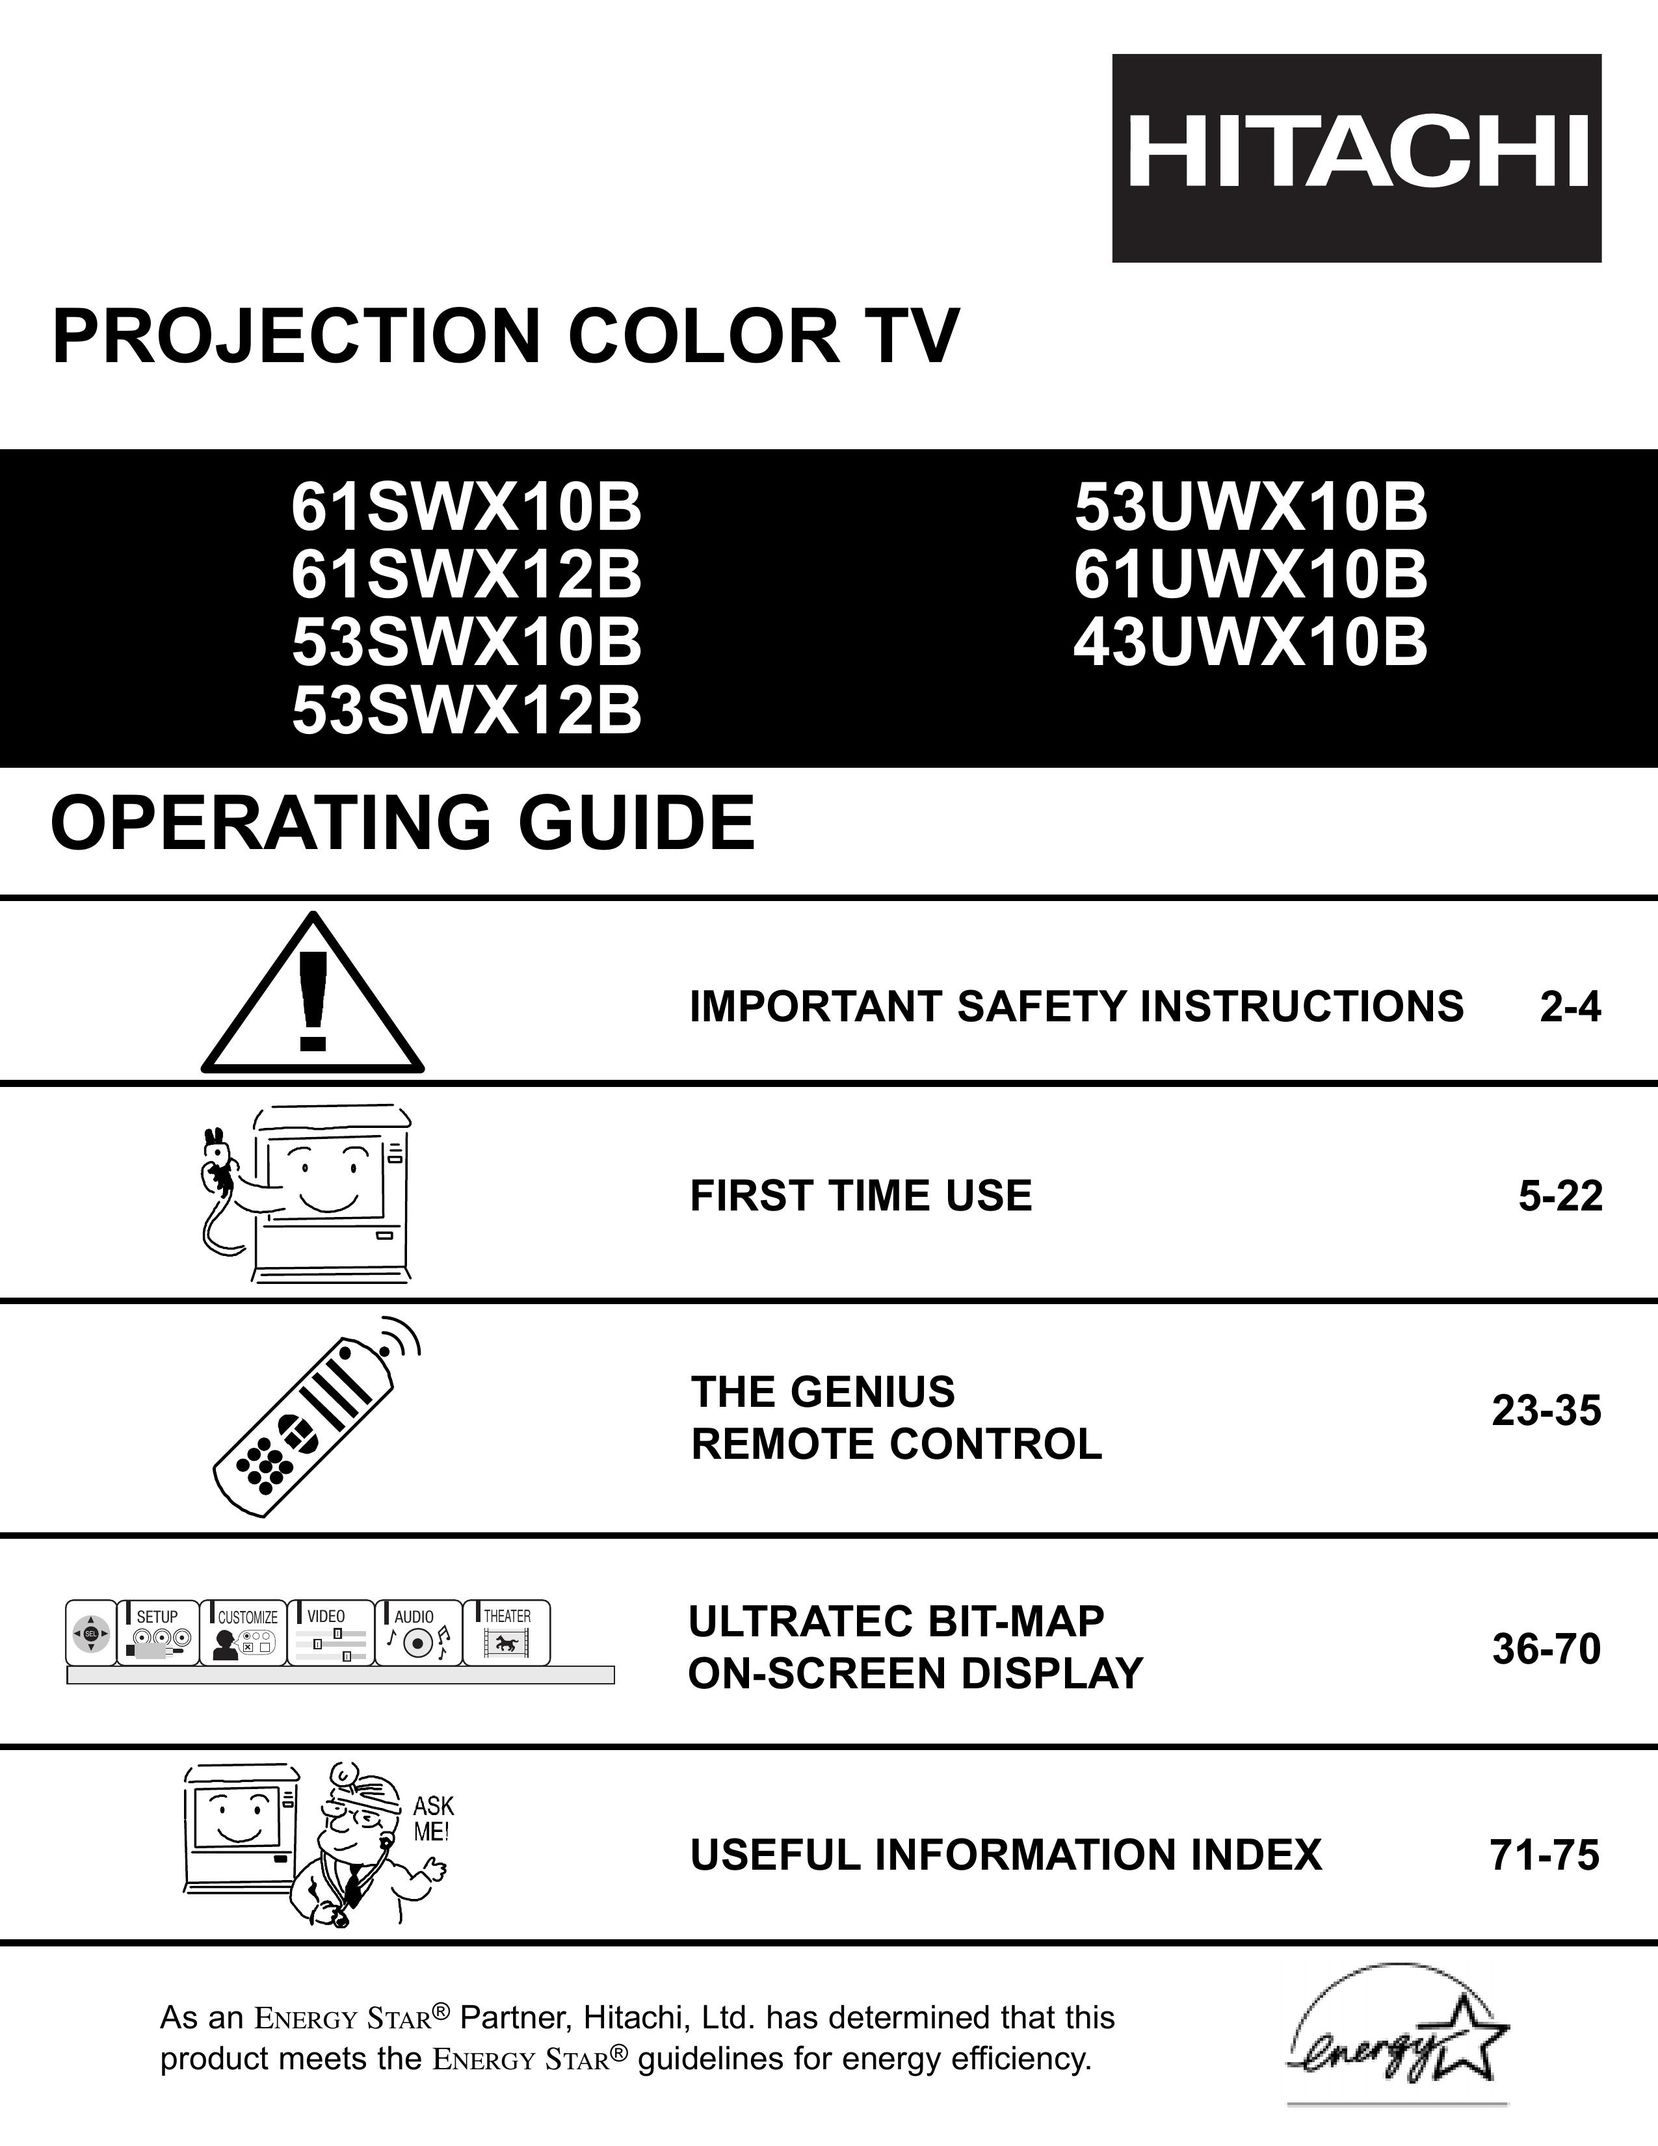 Hitachi 61UWX10B CRT Television User Manual